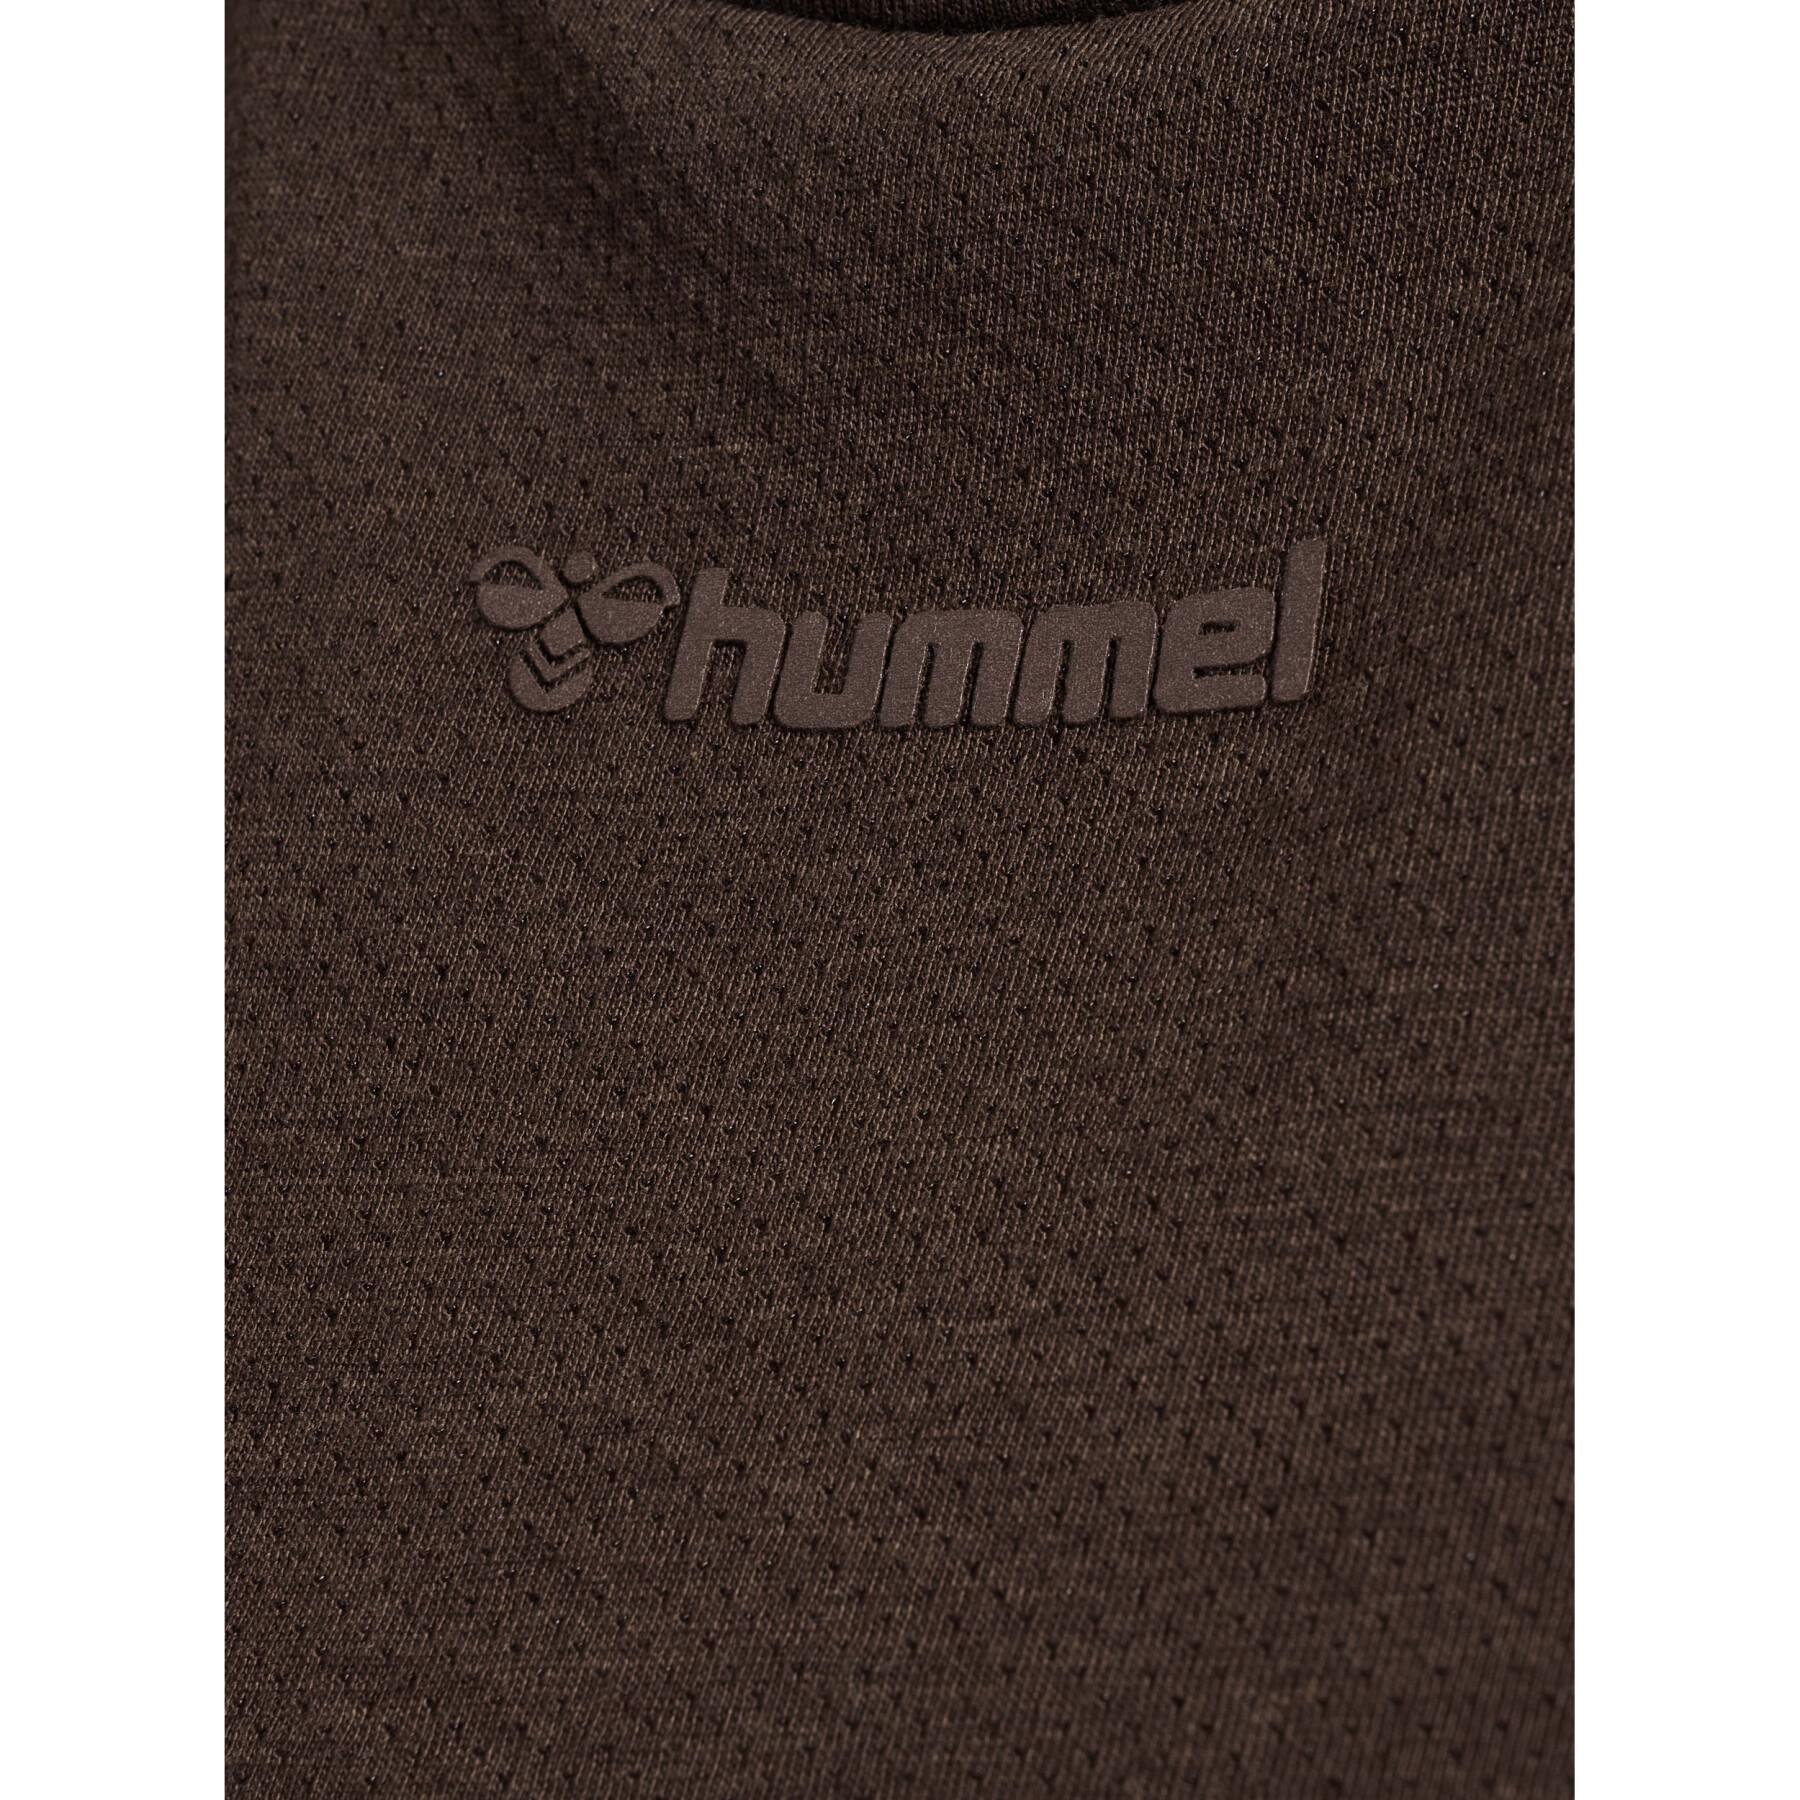 Camiseta de tirantes mujer Hummel Mt Vanja